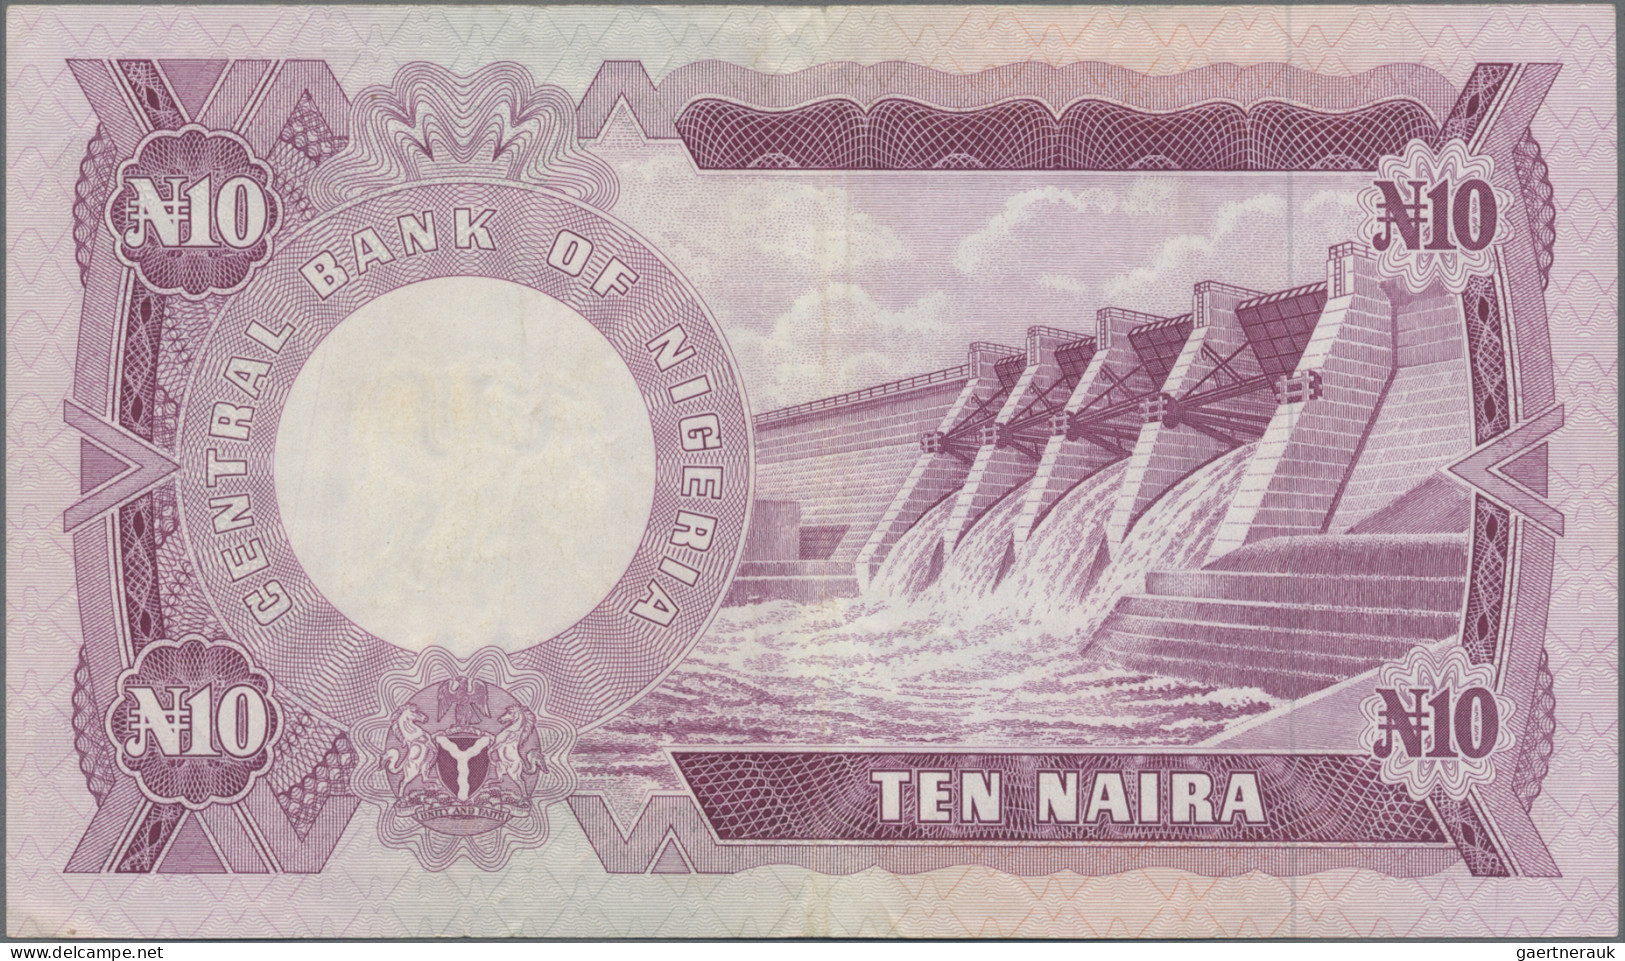 Nigeria: Central Bank of Nigeria, lot with 8 banknotes, 1973-1978 series, compri